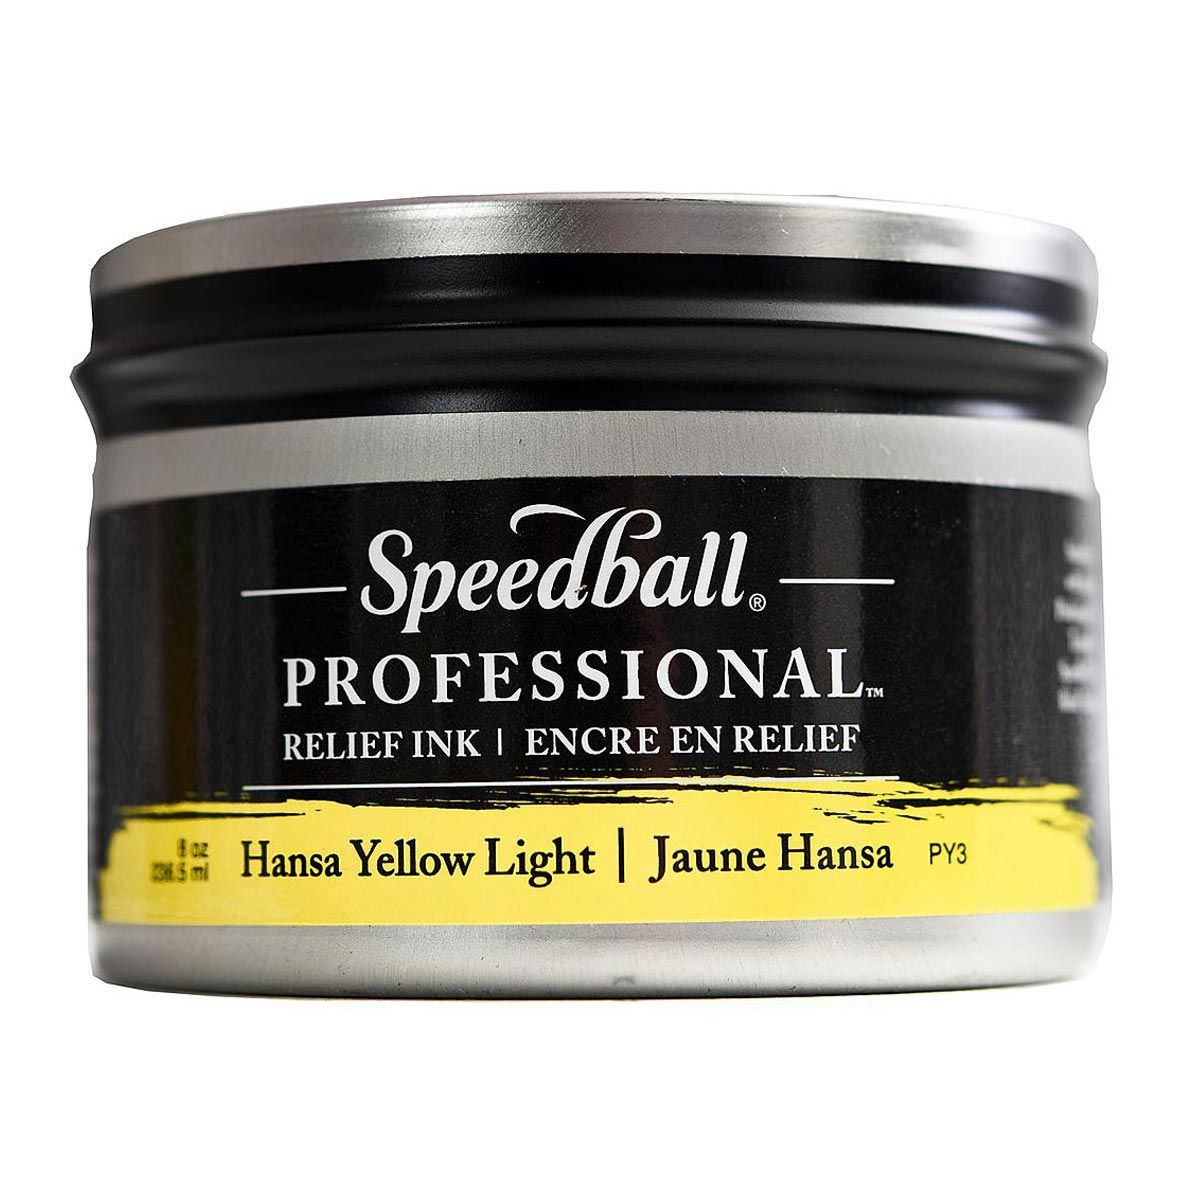 Speedball Professional Relief Ink - Hansa Yellow Light 8 oz